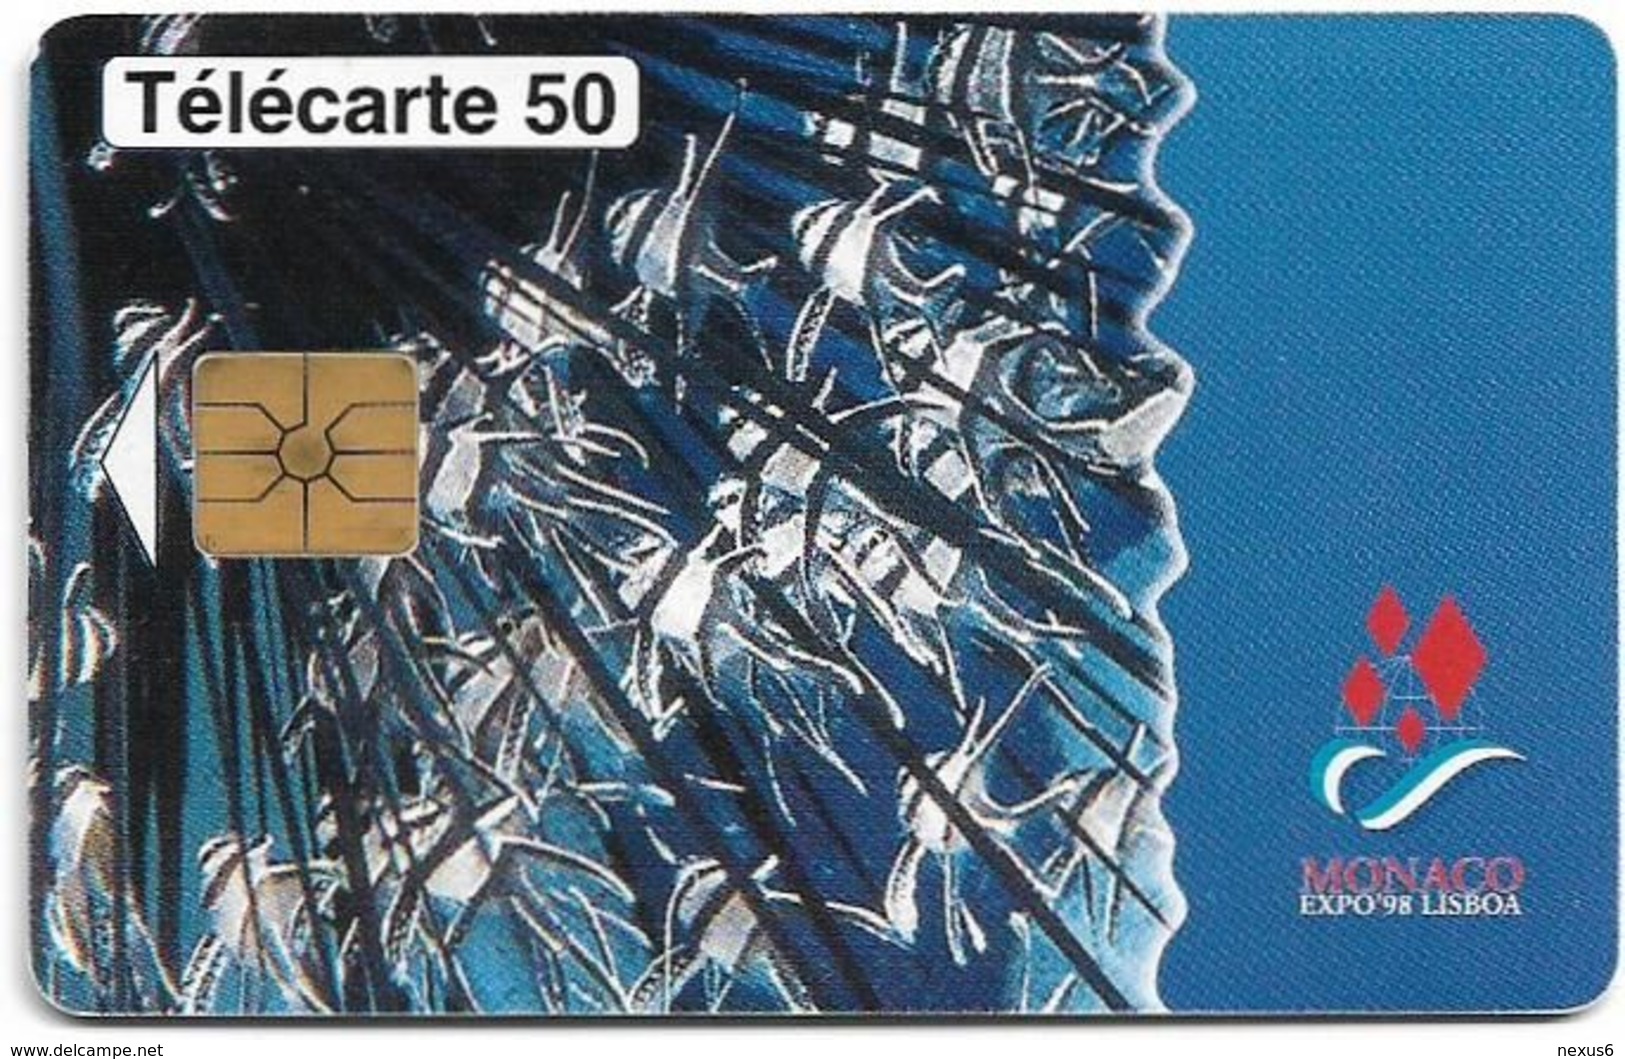 Monaco - MF47 (002) - Expo Lisboa '98 - Gem1A Symm. Black, Cn. B7Cxx002, 12.1997, 50Units, 50.600ex, Used - Monaco